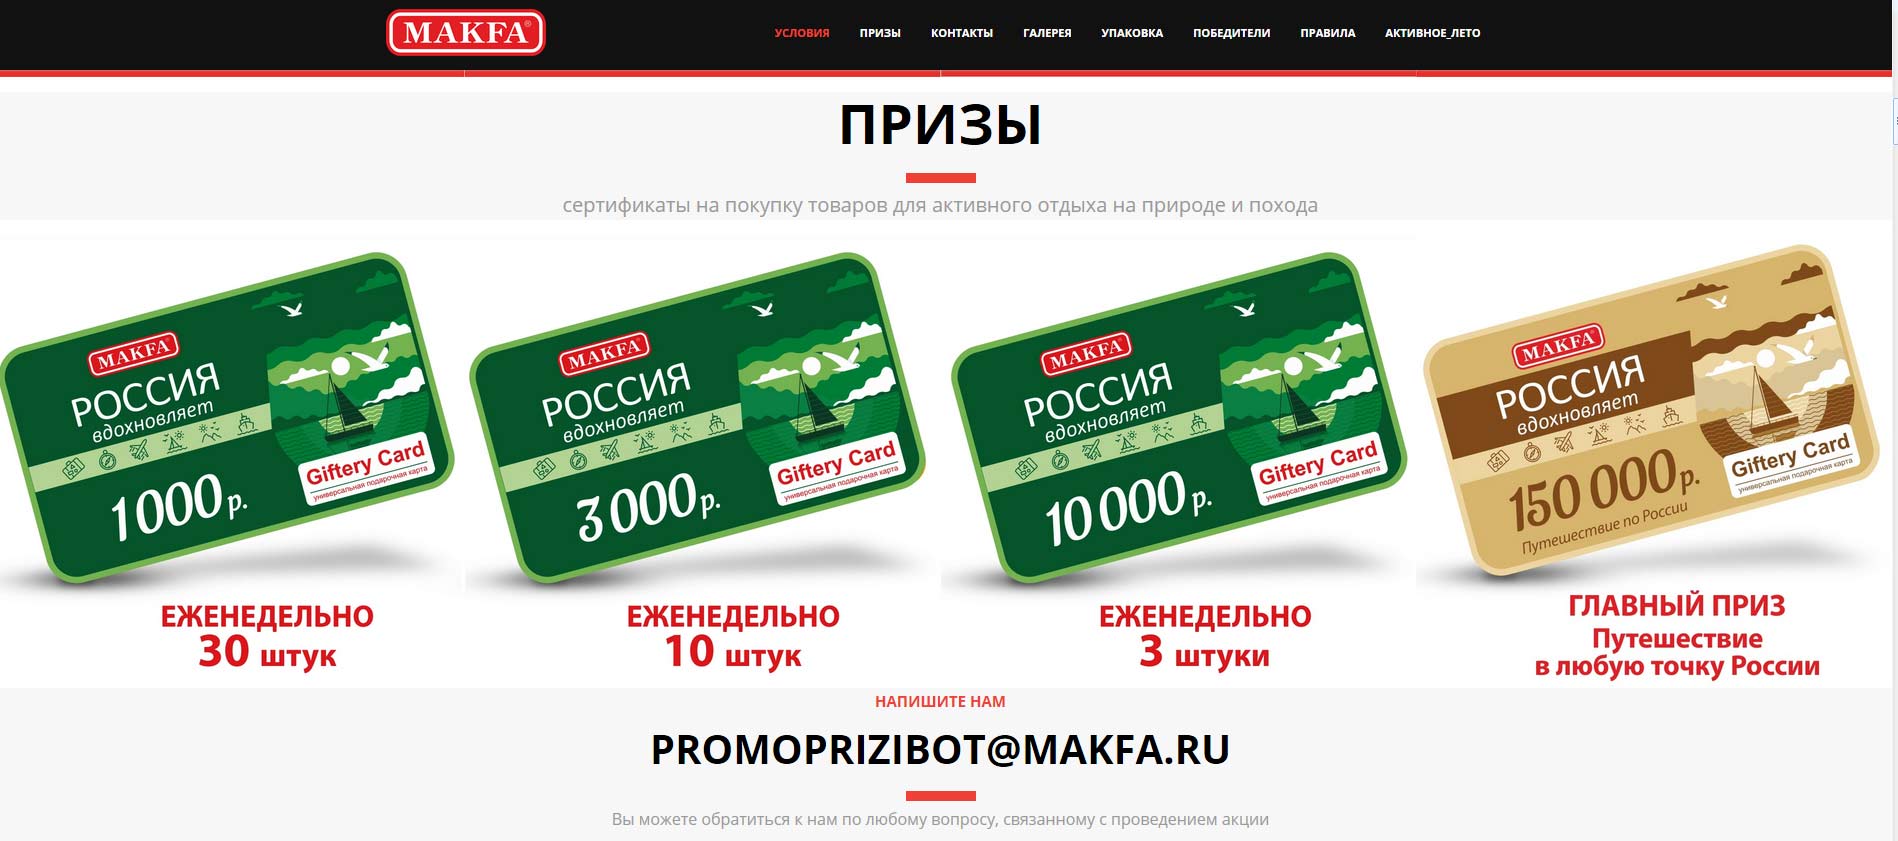 www.makfa.ru как зарегистрироваться